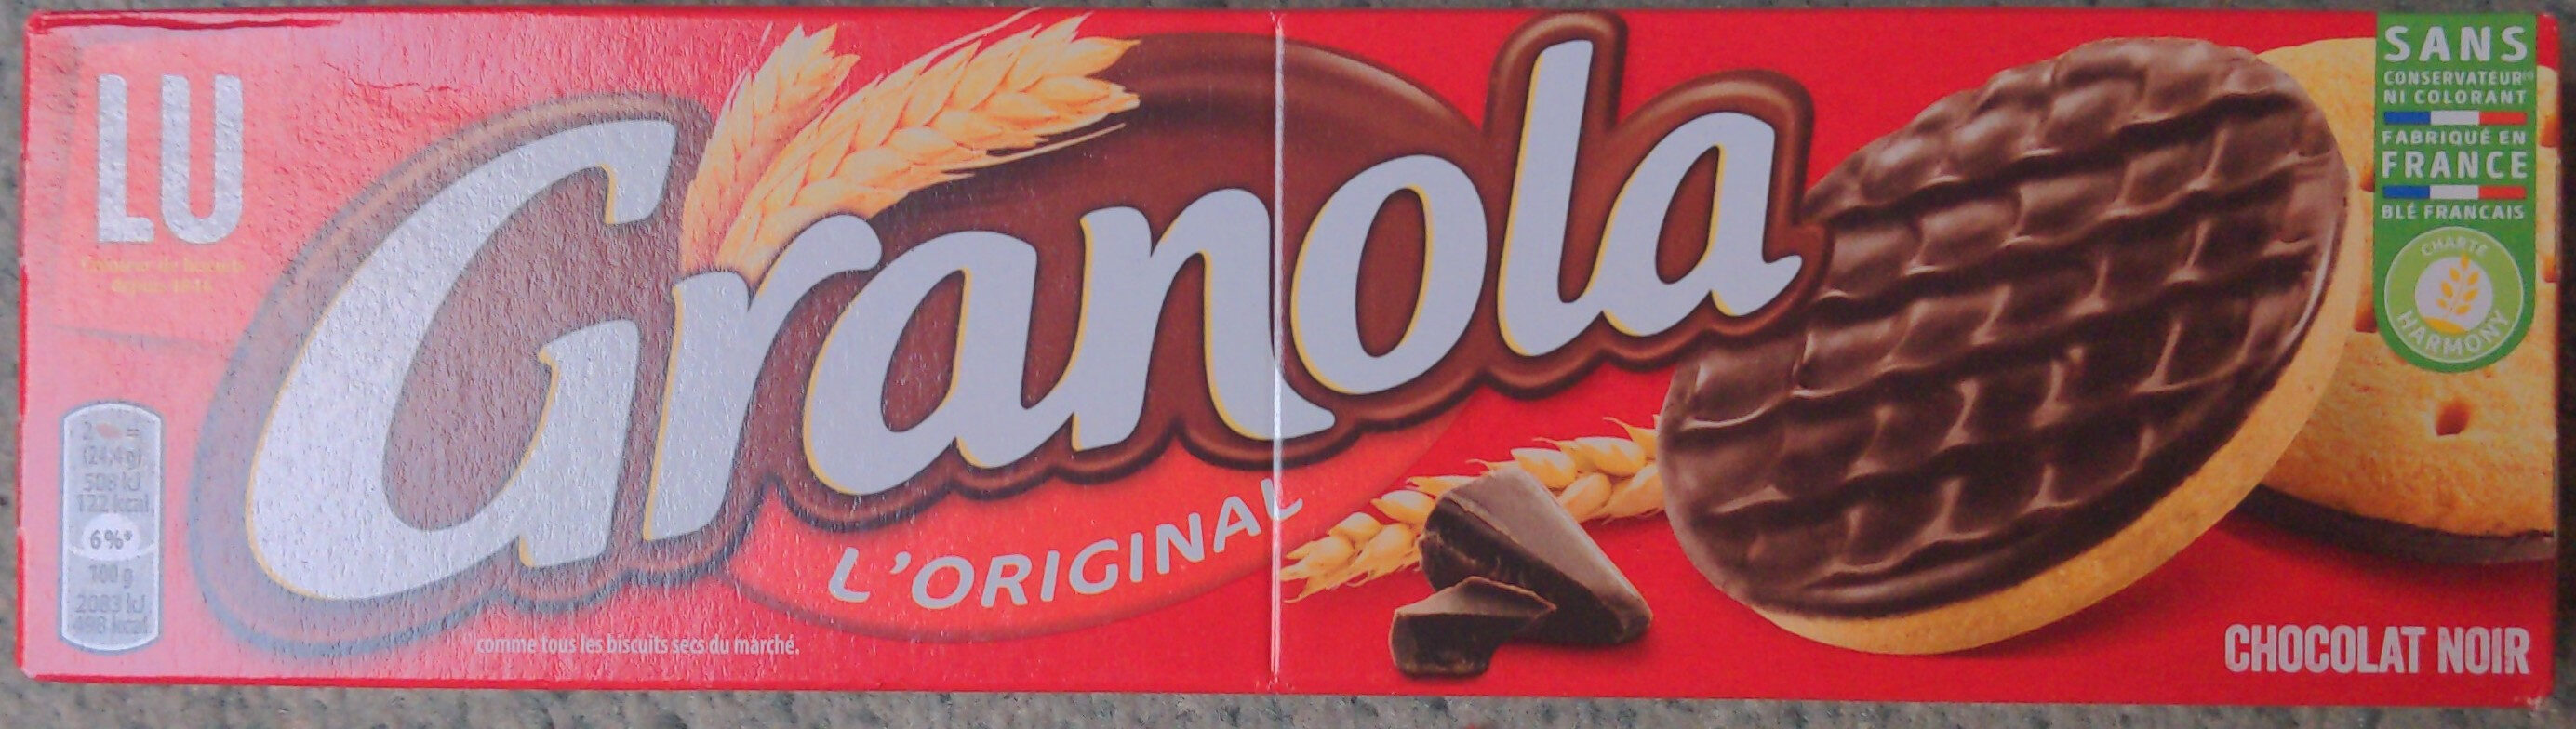 Granola Chocolat Noir - Prodotto - fr